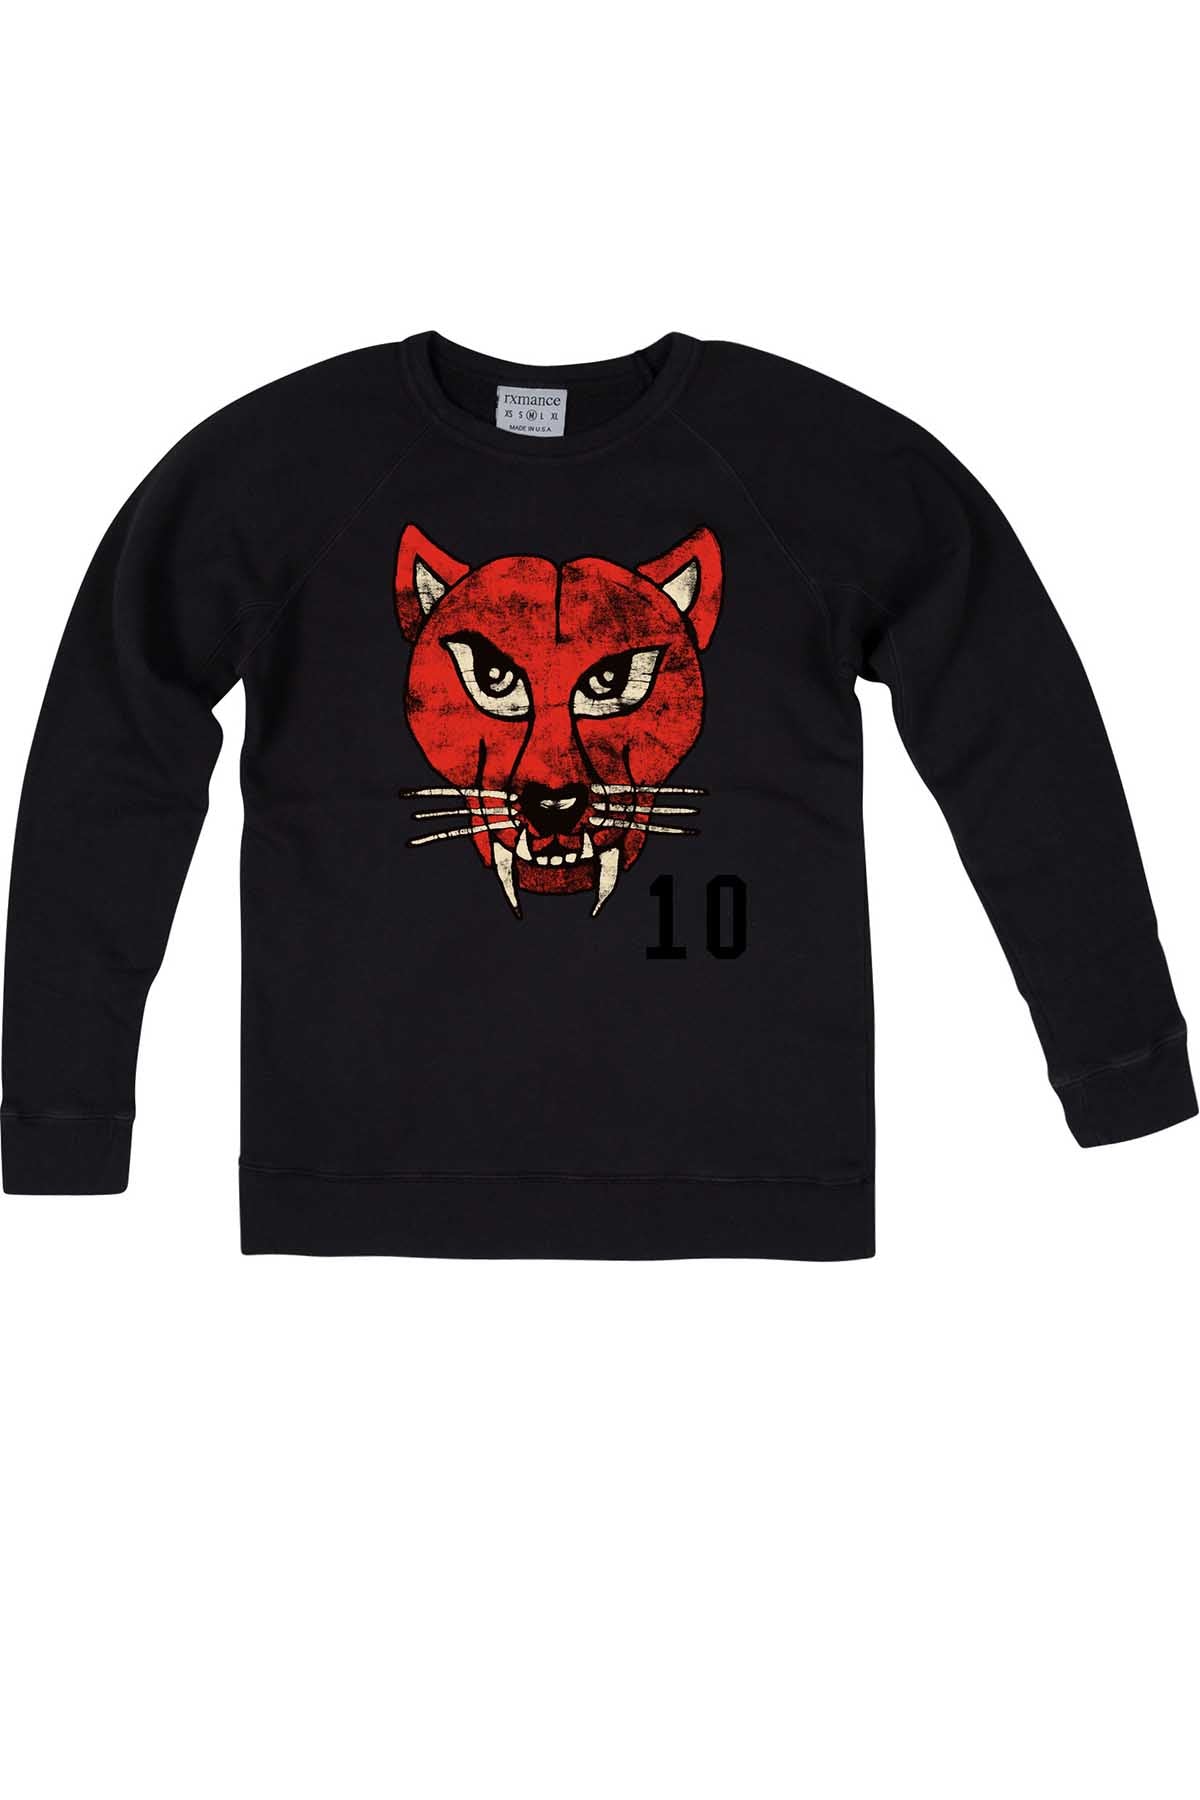 Rxmance Unisex Black Cat Crew Sweatshirt